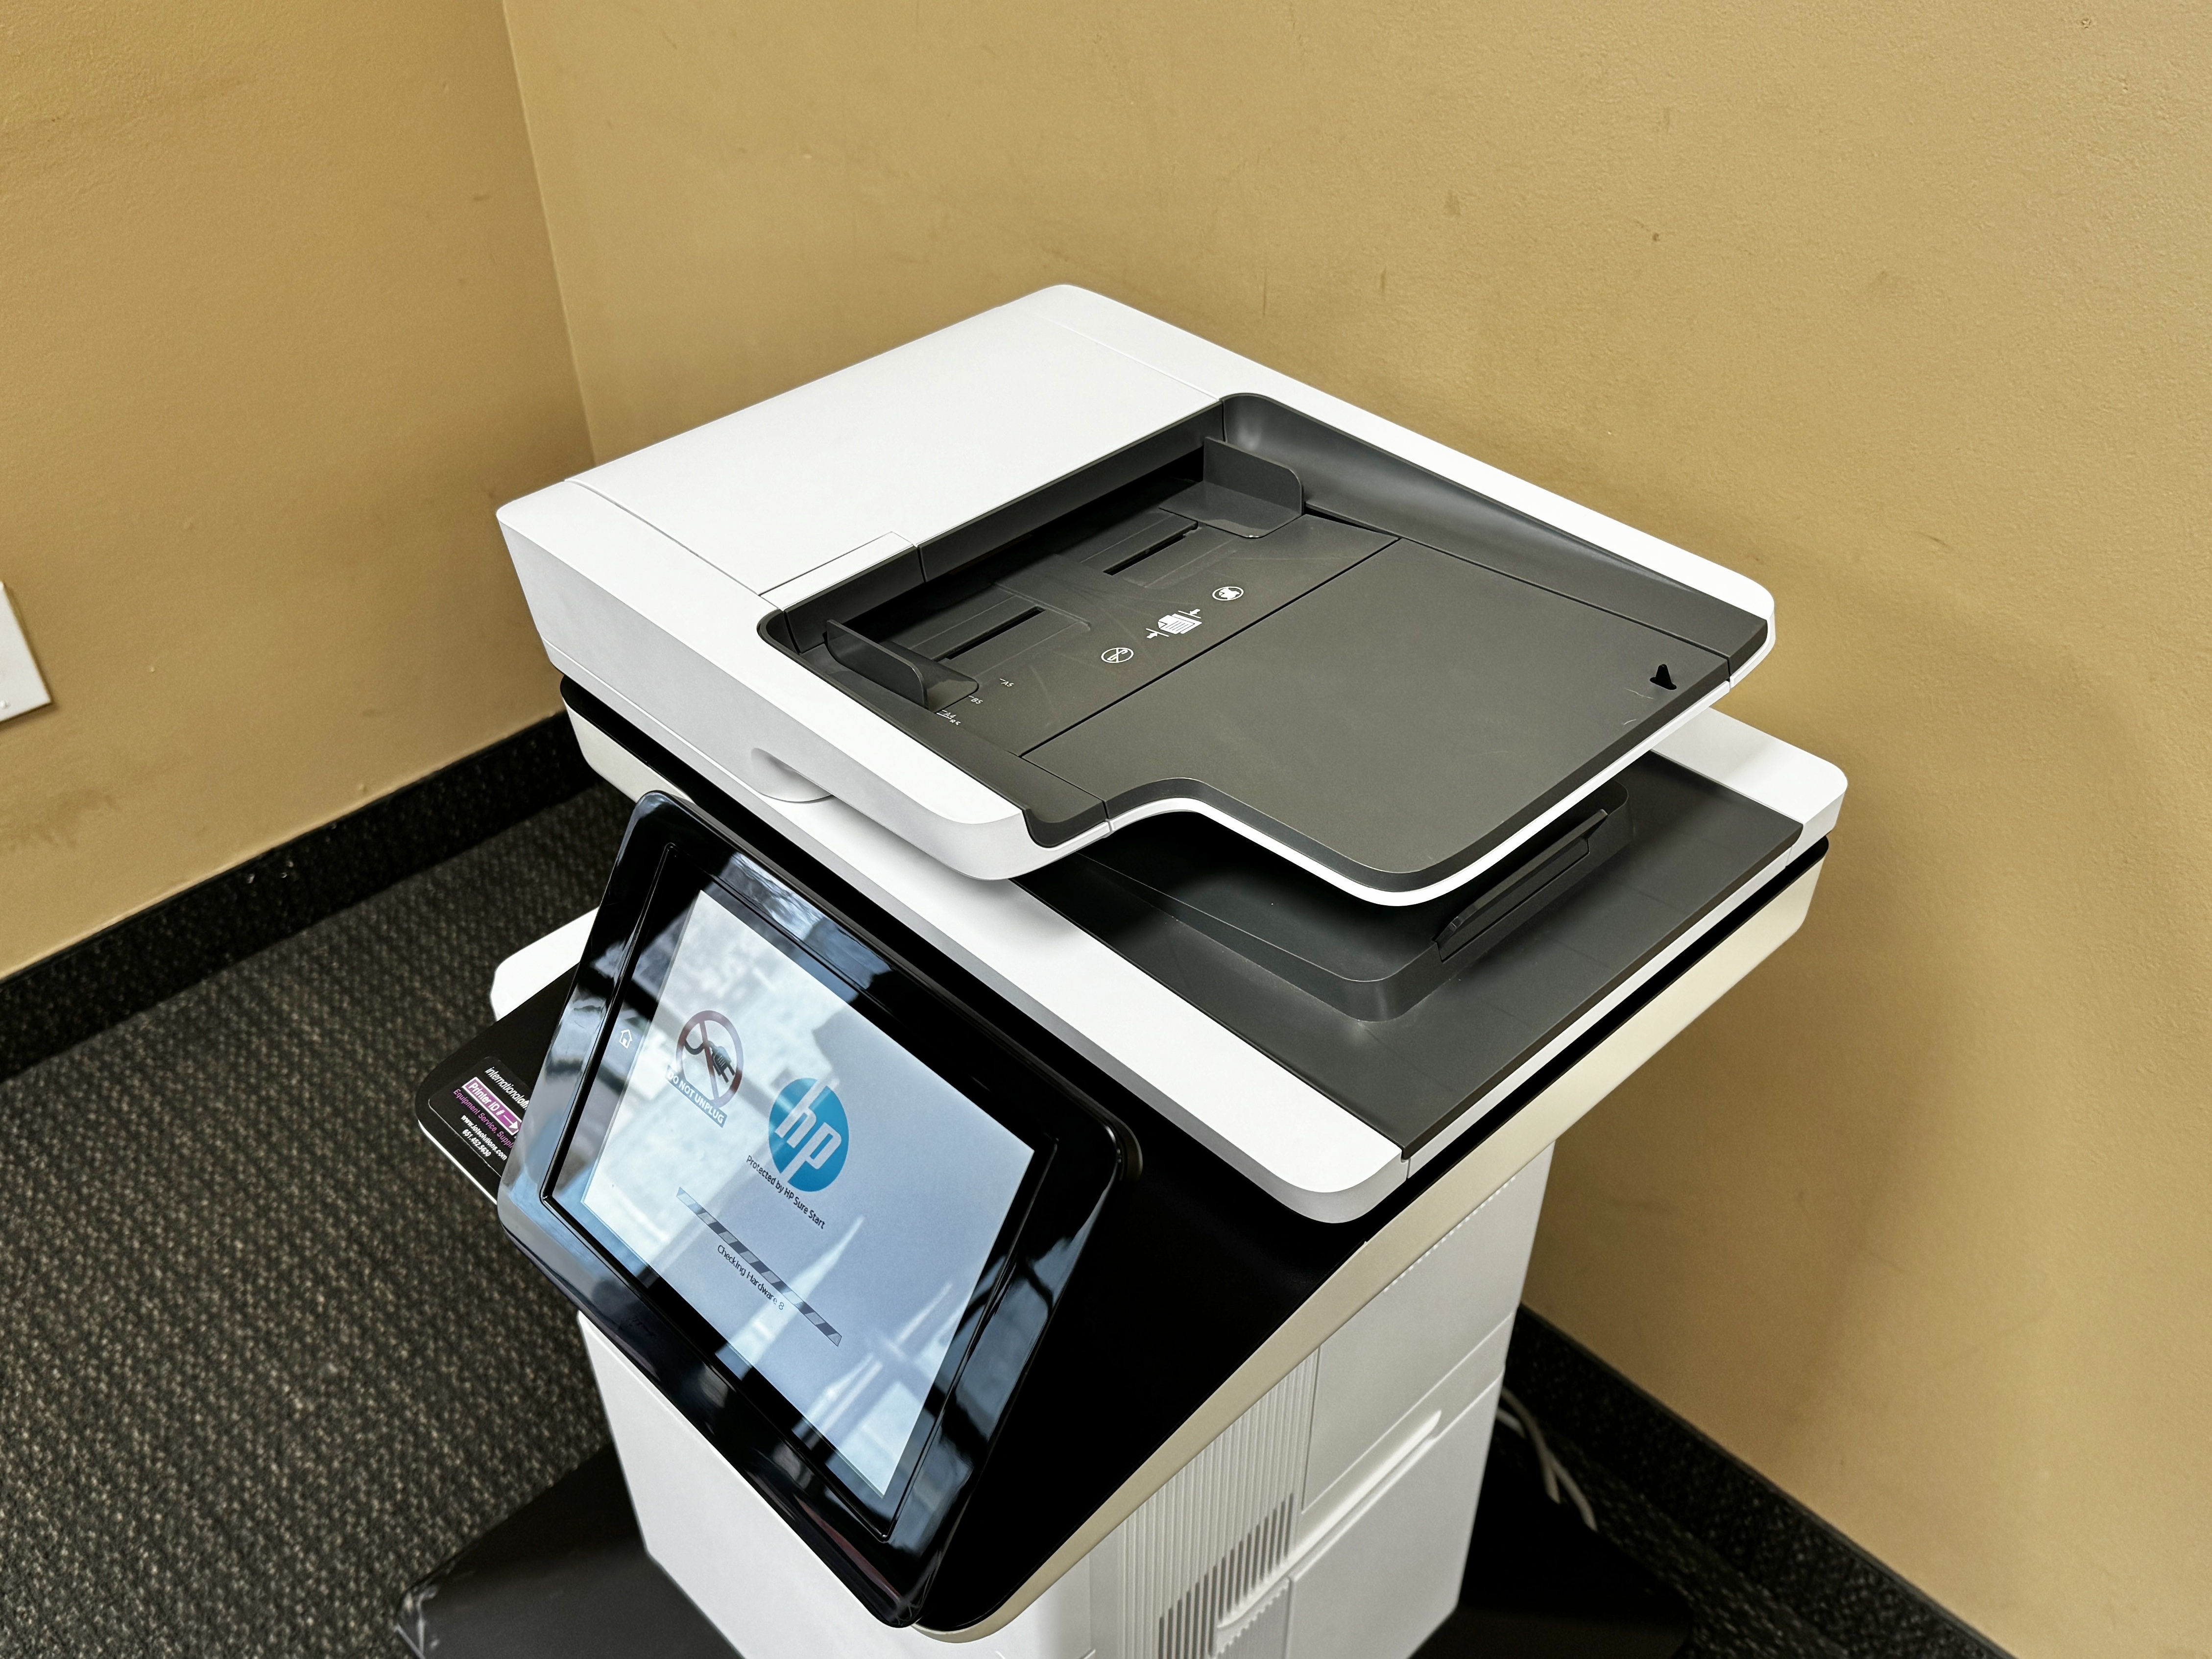 HP M527 black and white copier. 